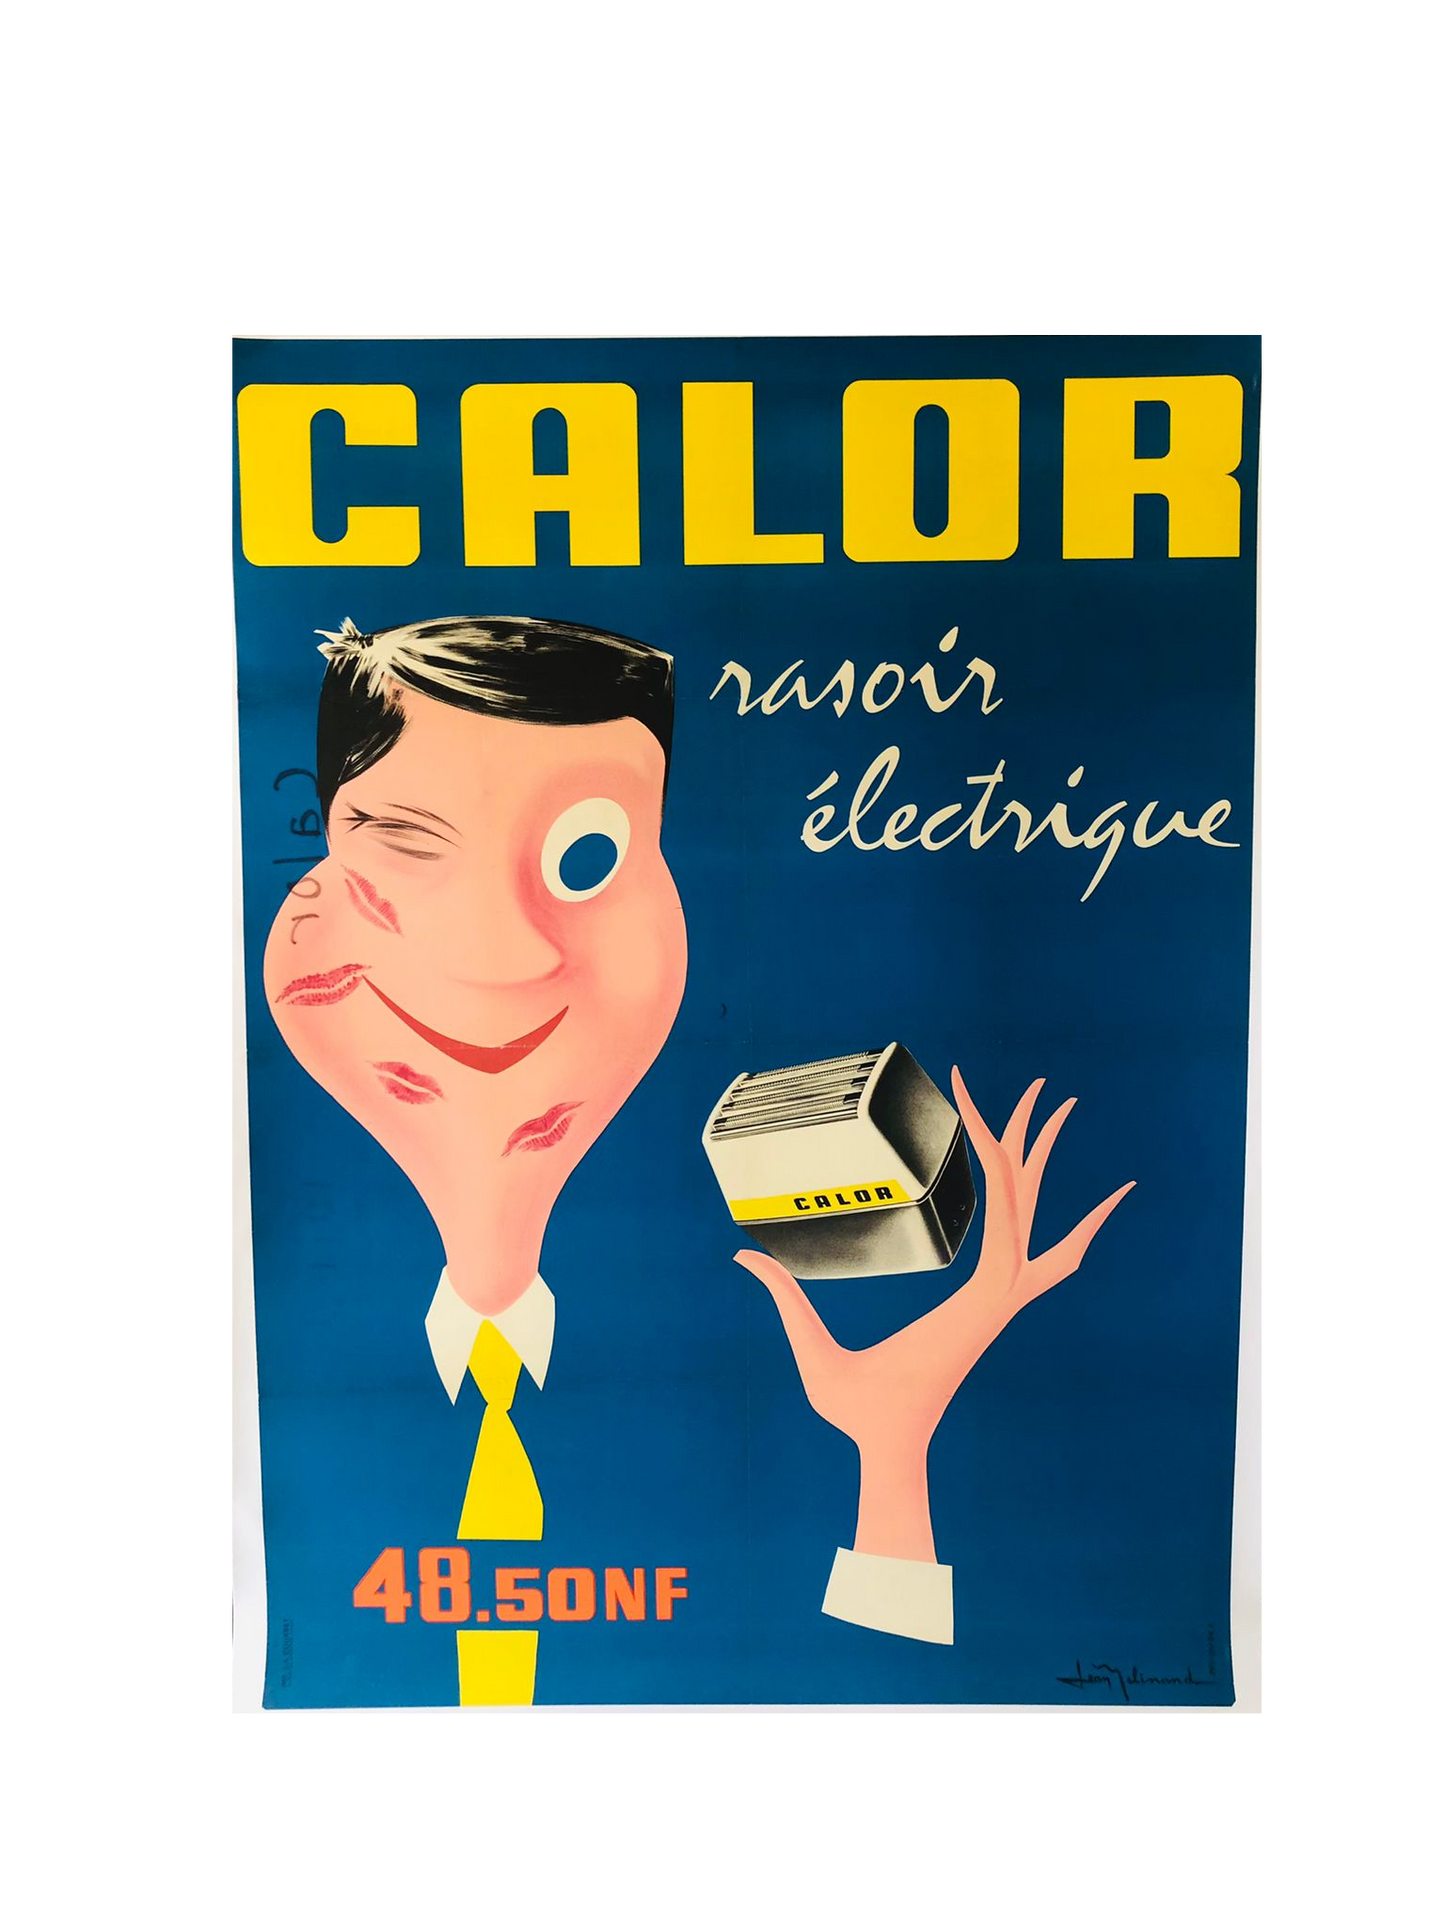 Calor Electric Razor Advertisement